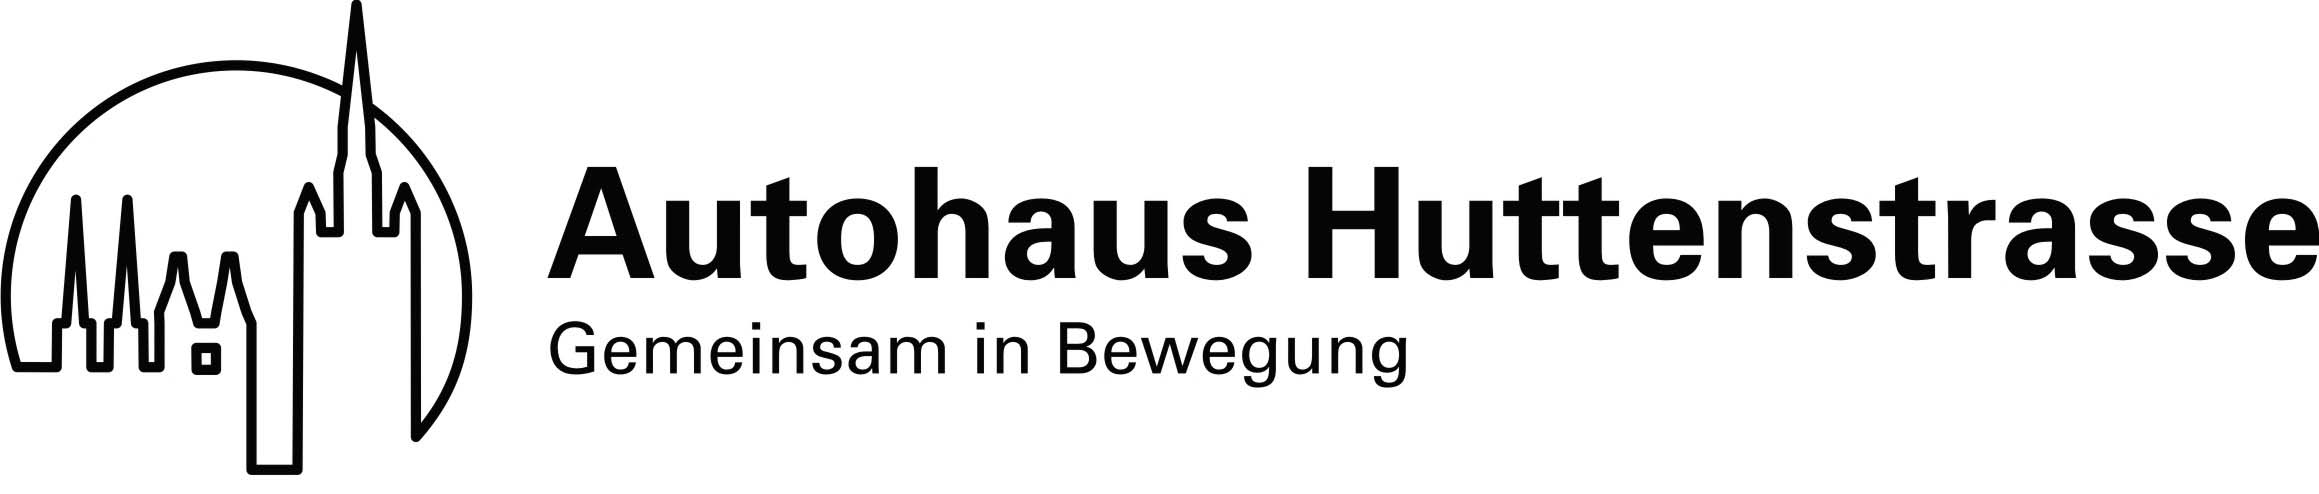 autohaus-huttenstrasse - Saalebulls Sponsor